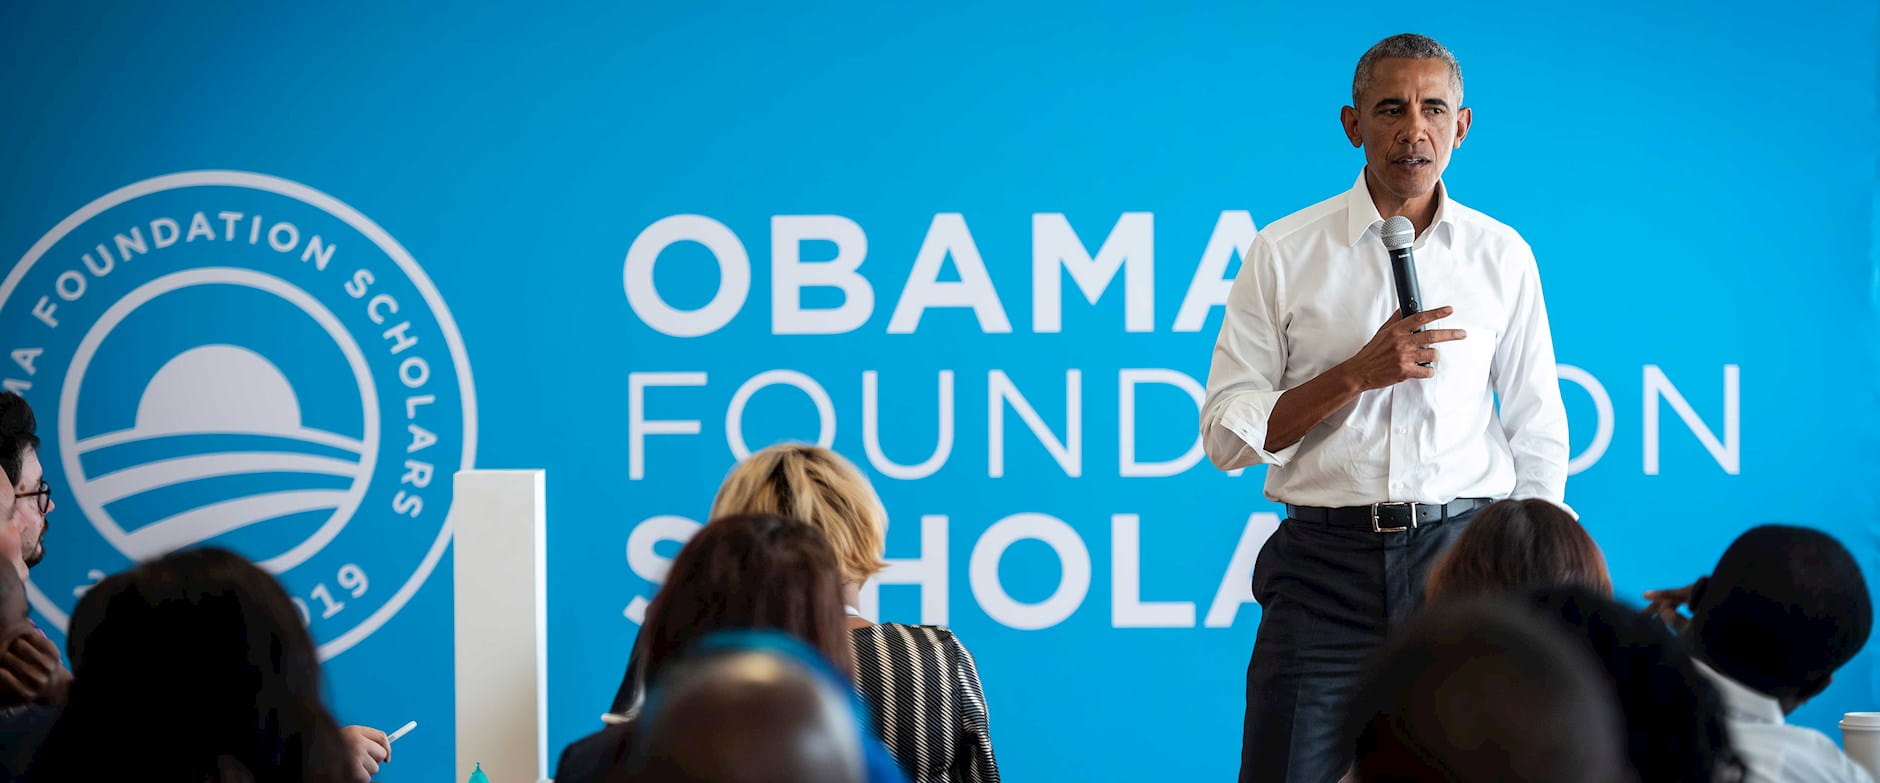 Barack Obama sspeaking in front of a foundation sign